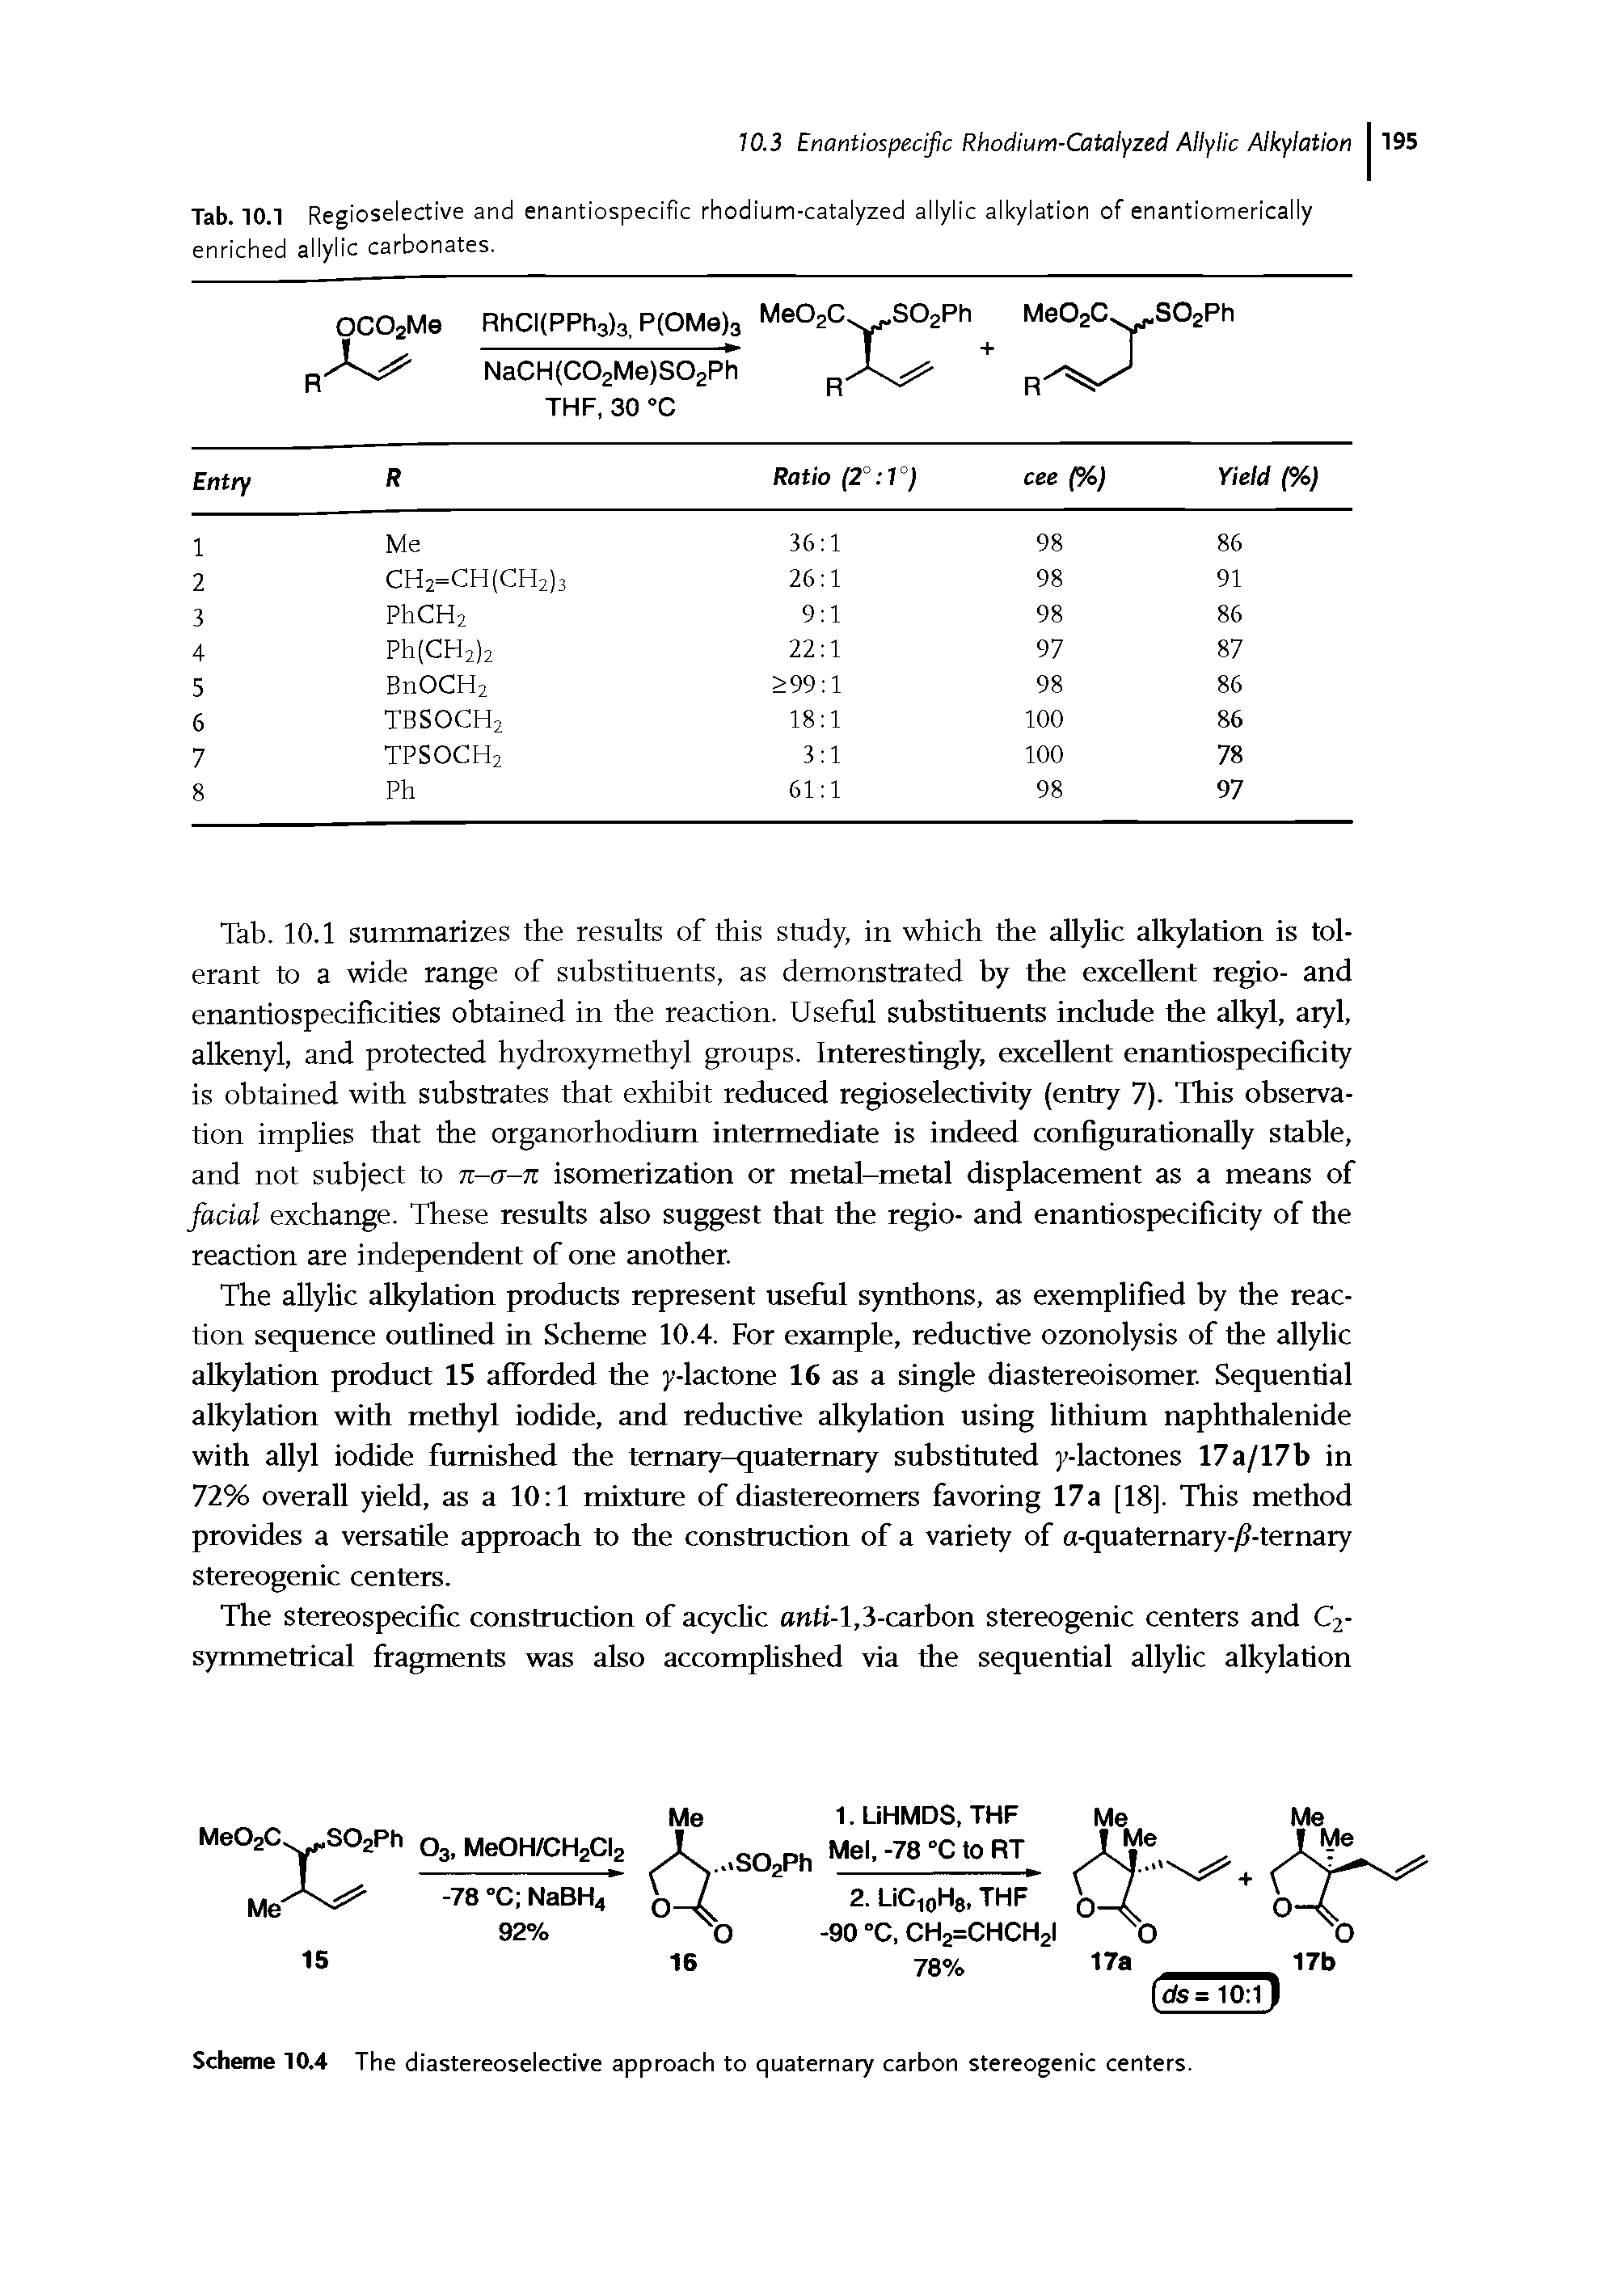 Tab. 10.1 Regioselective and enantiospecific rhodium-catalyzed allylic alkylation of enantiomerically enriched allylic carbonates.